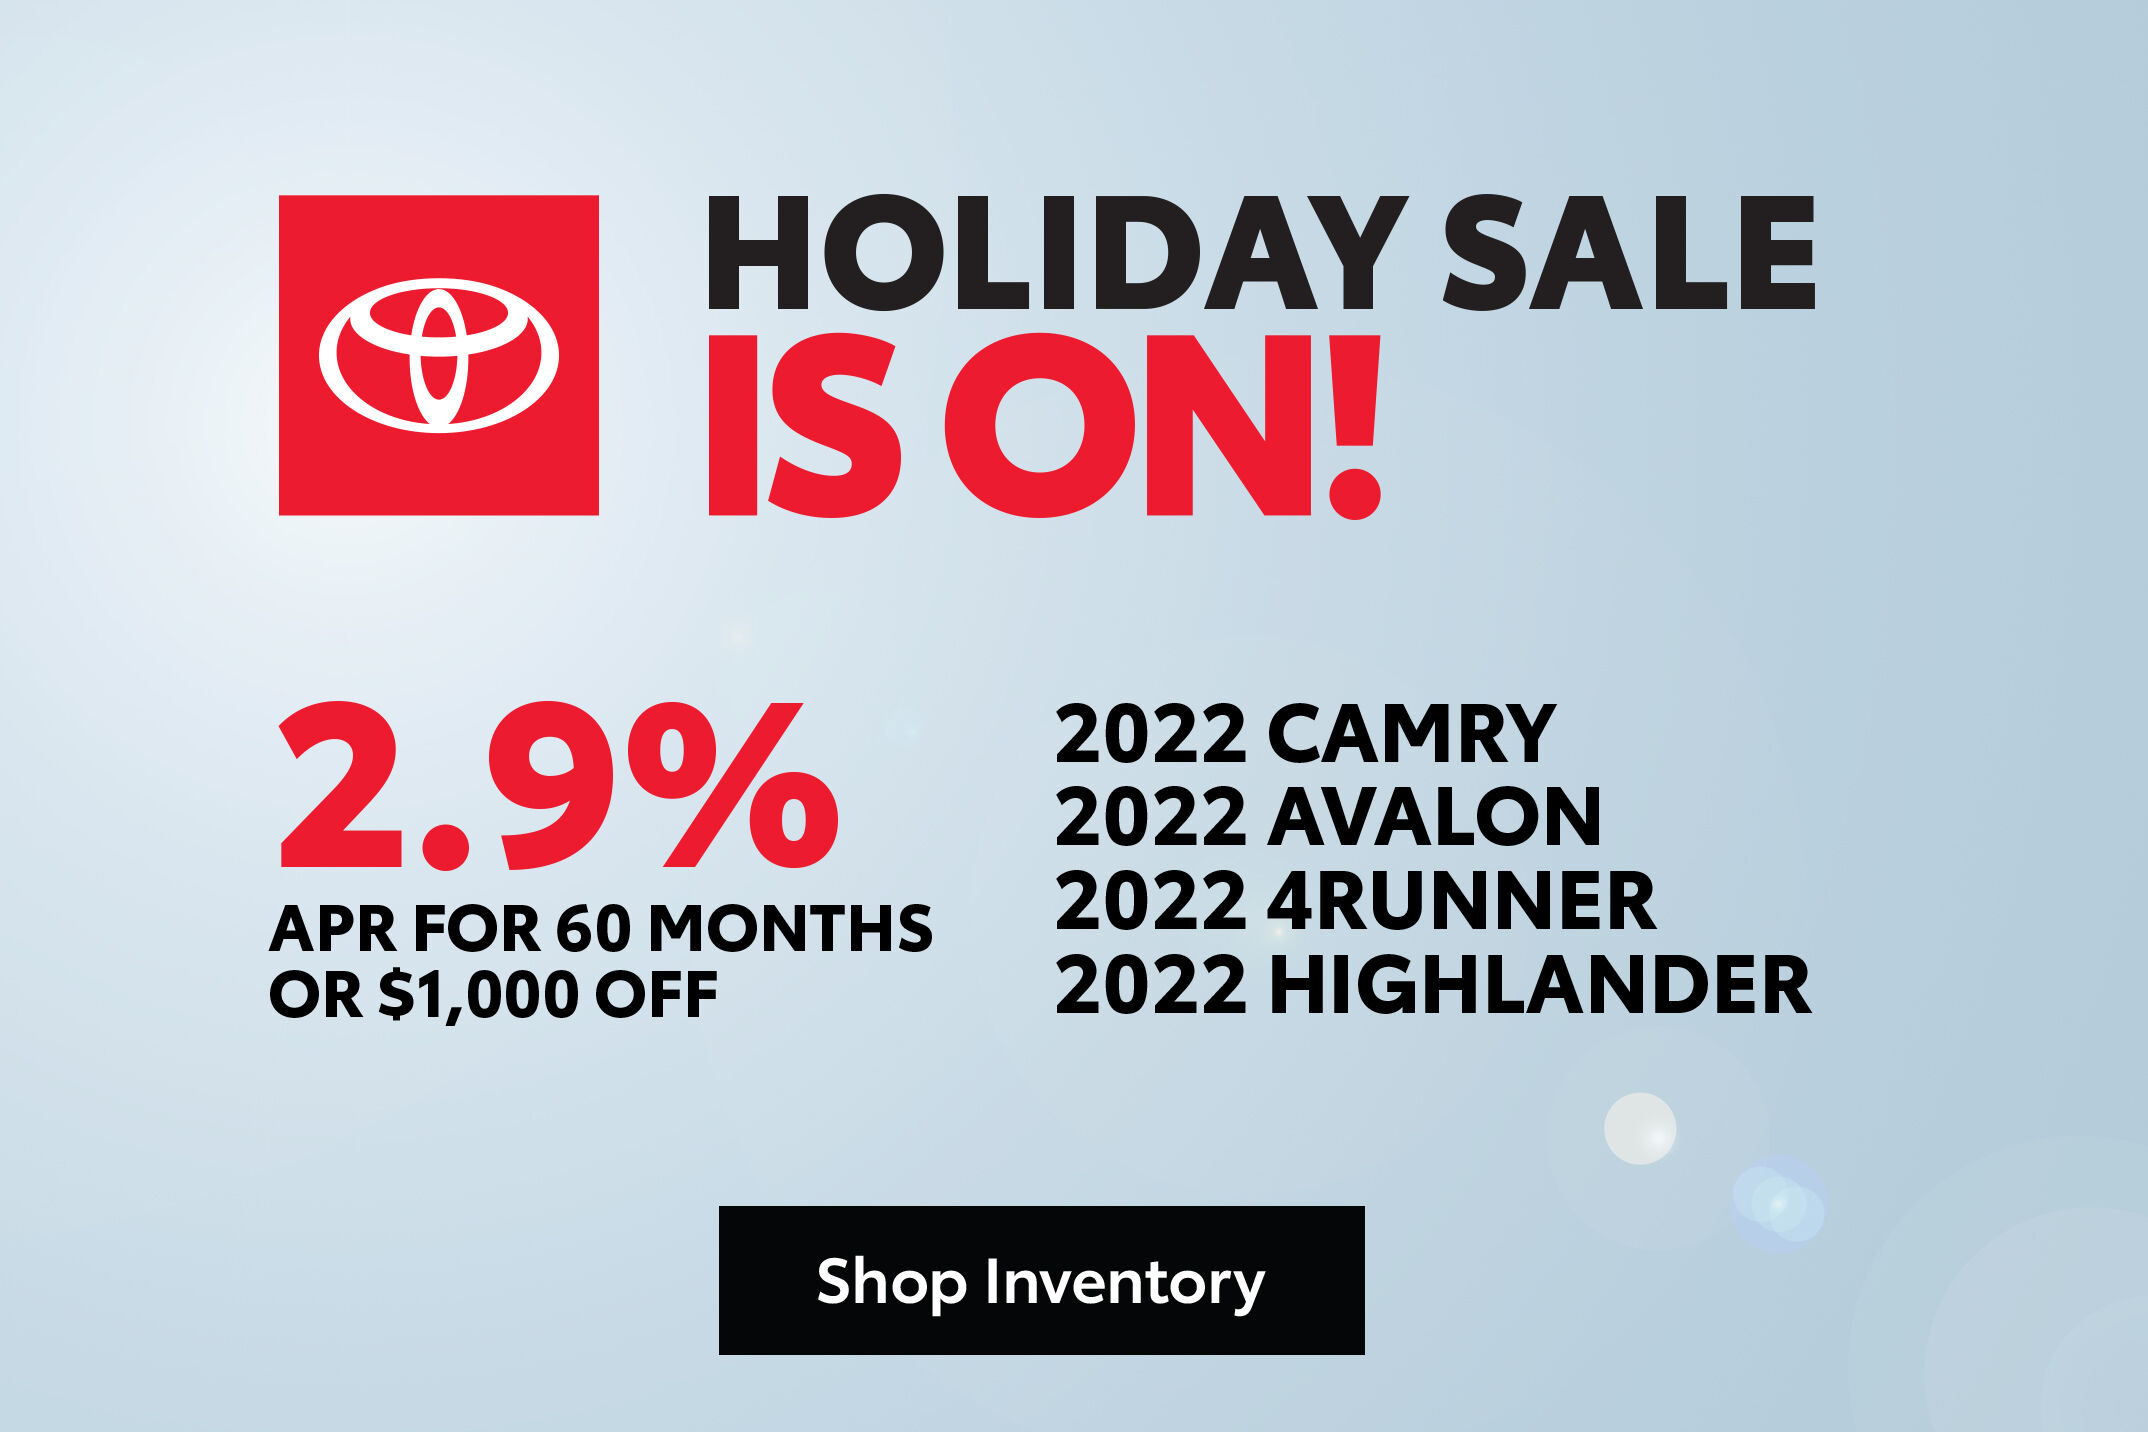 Holiday Sale - 2022 Camry, 2022 Avalon, 2022 4Runner, 2022 Highlander - 2.9% APR for 60 months or $1,000 off